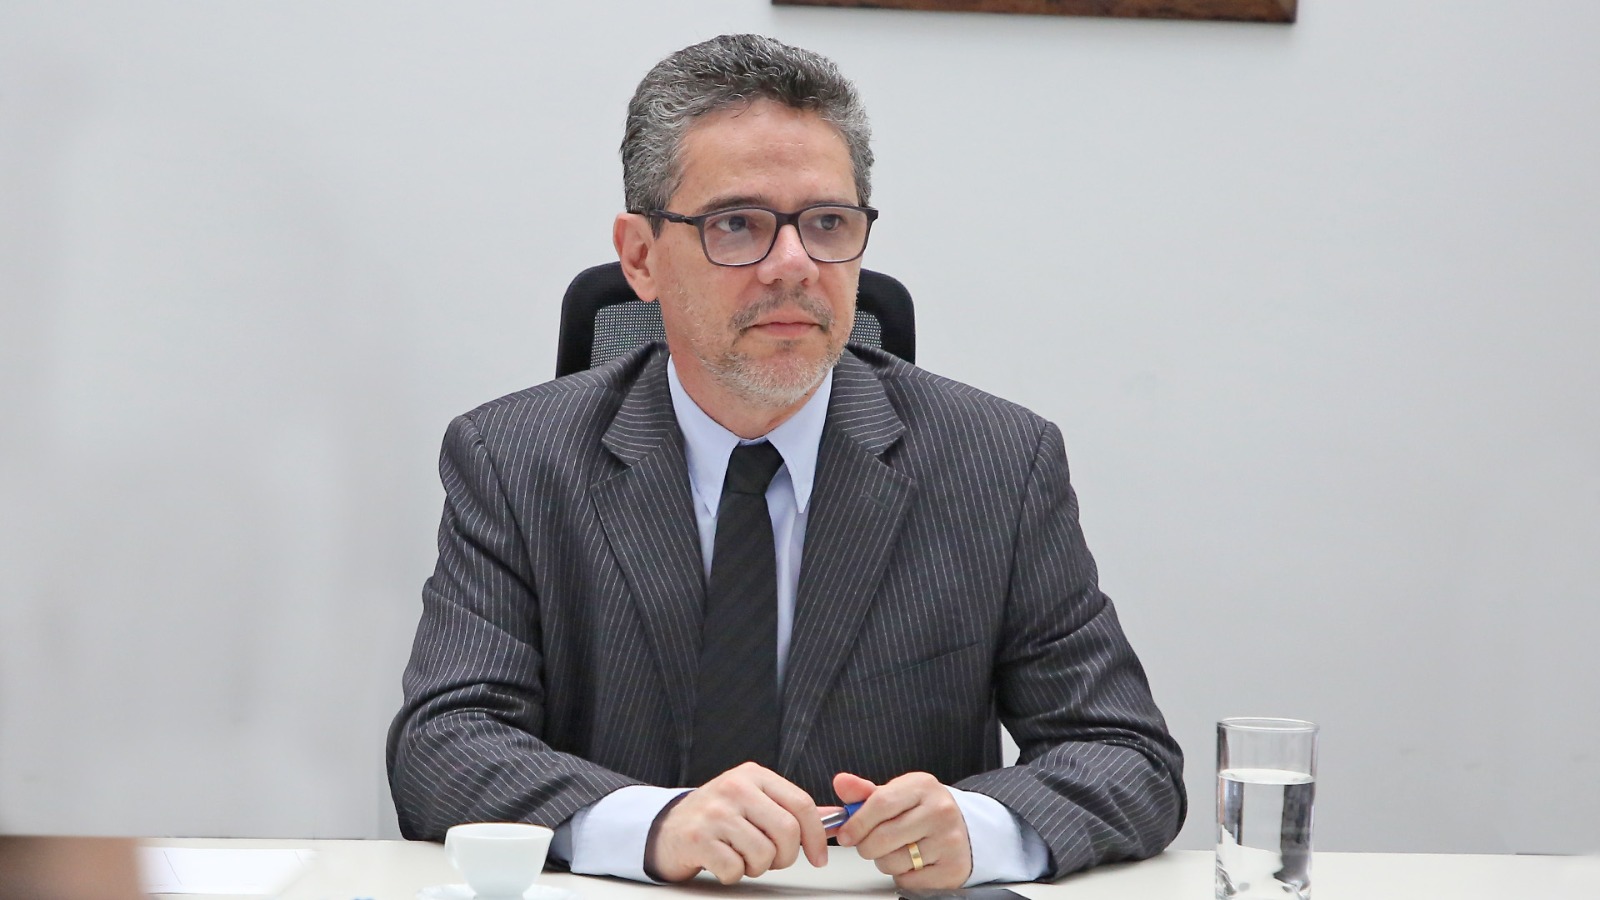 Juiz Adriano Gomes de Melo Oliveira sentado, usando óculos, terno cinza escuro, camiza azul claro e gravata preta